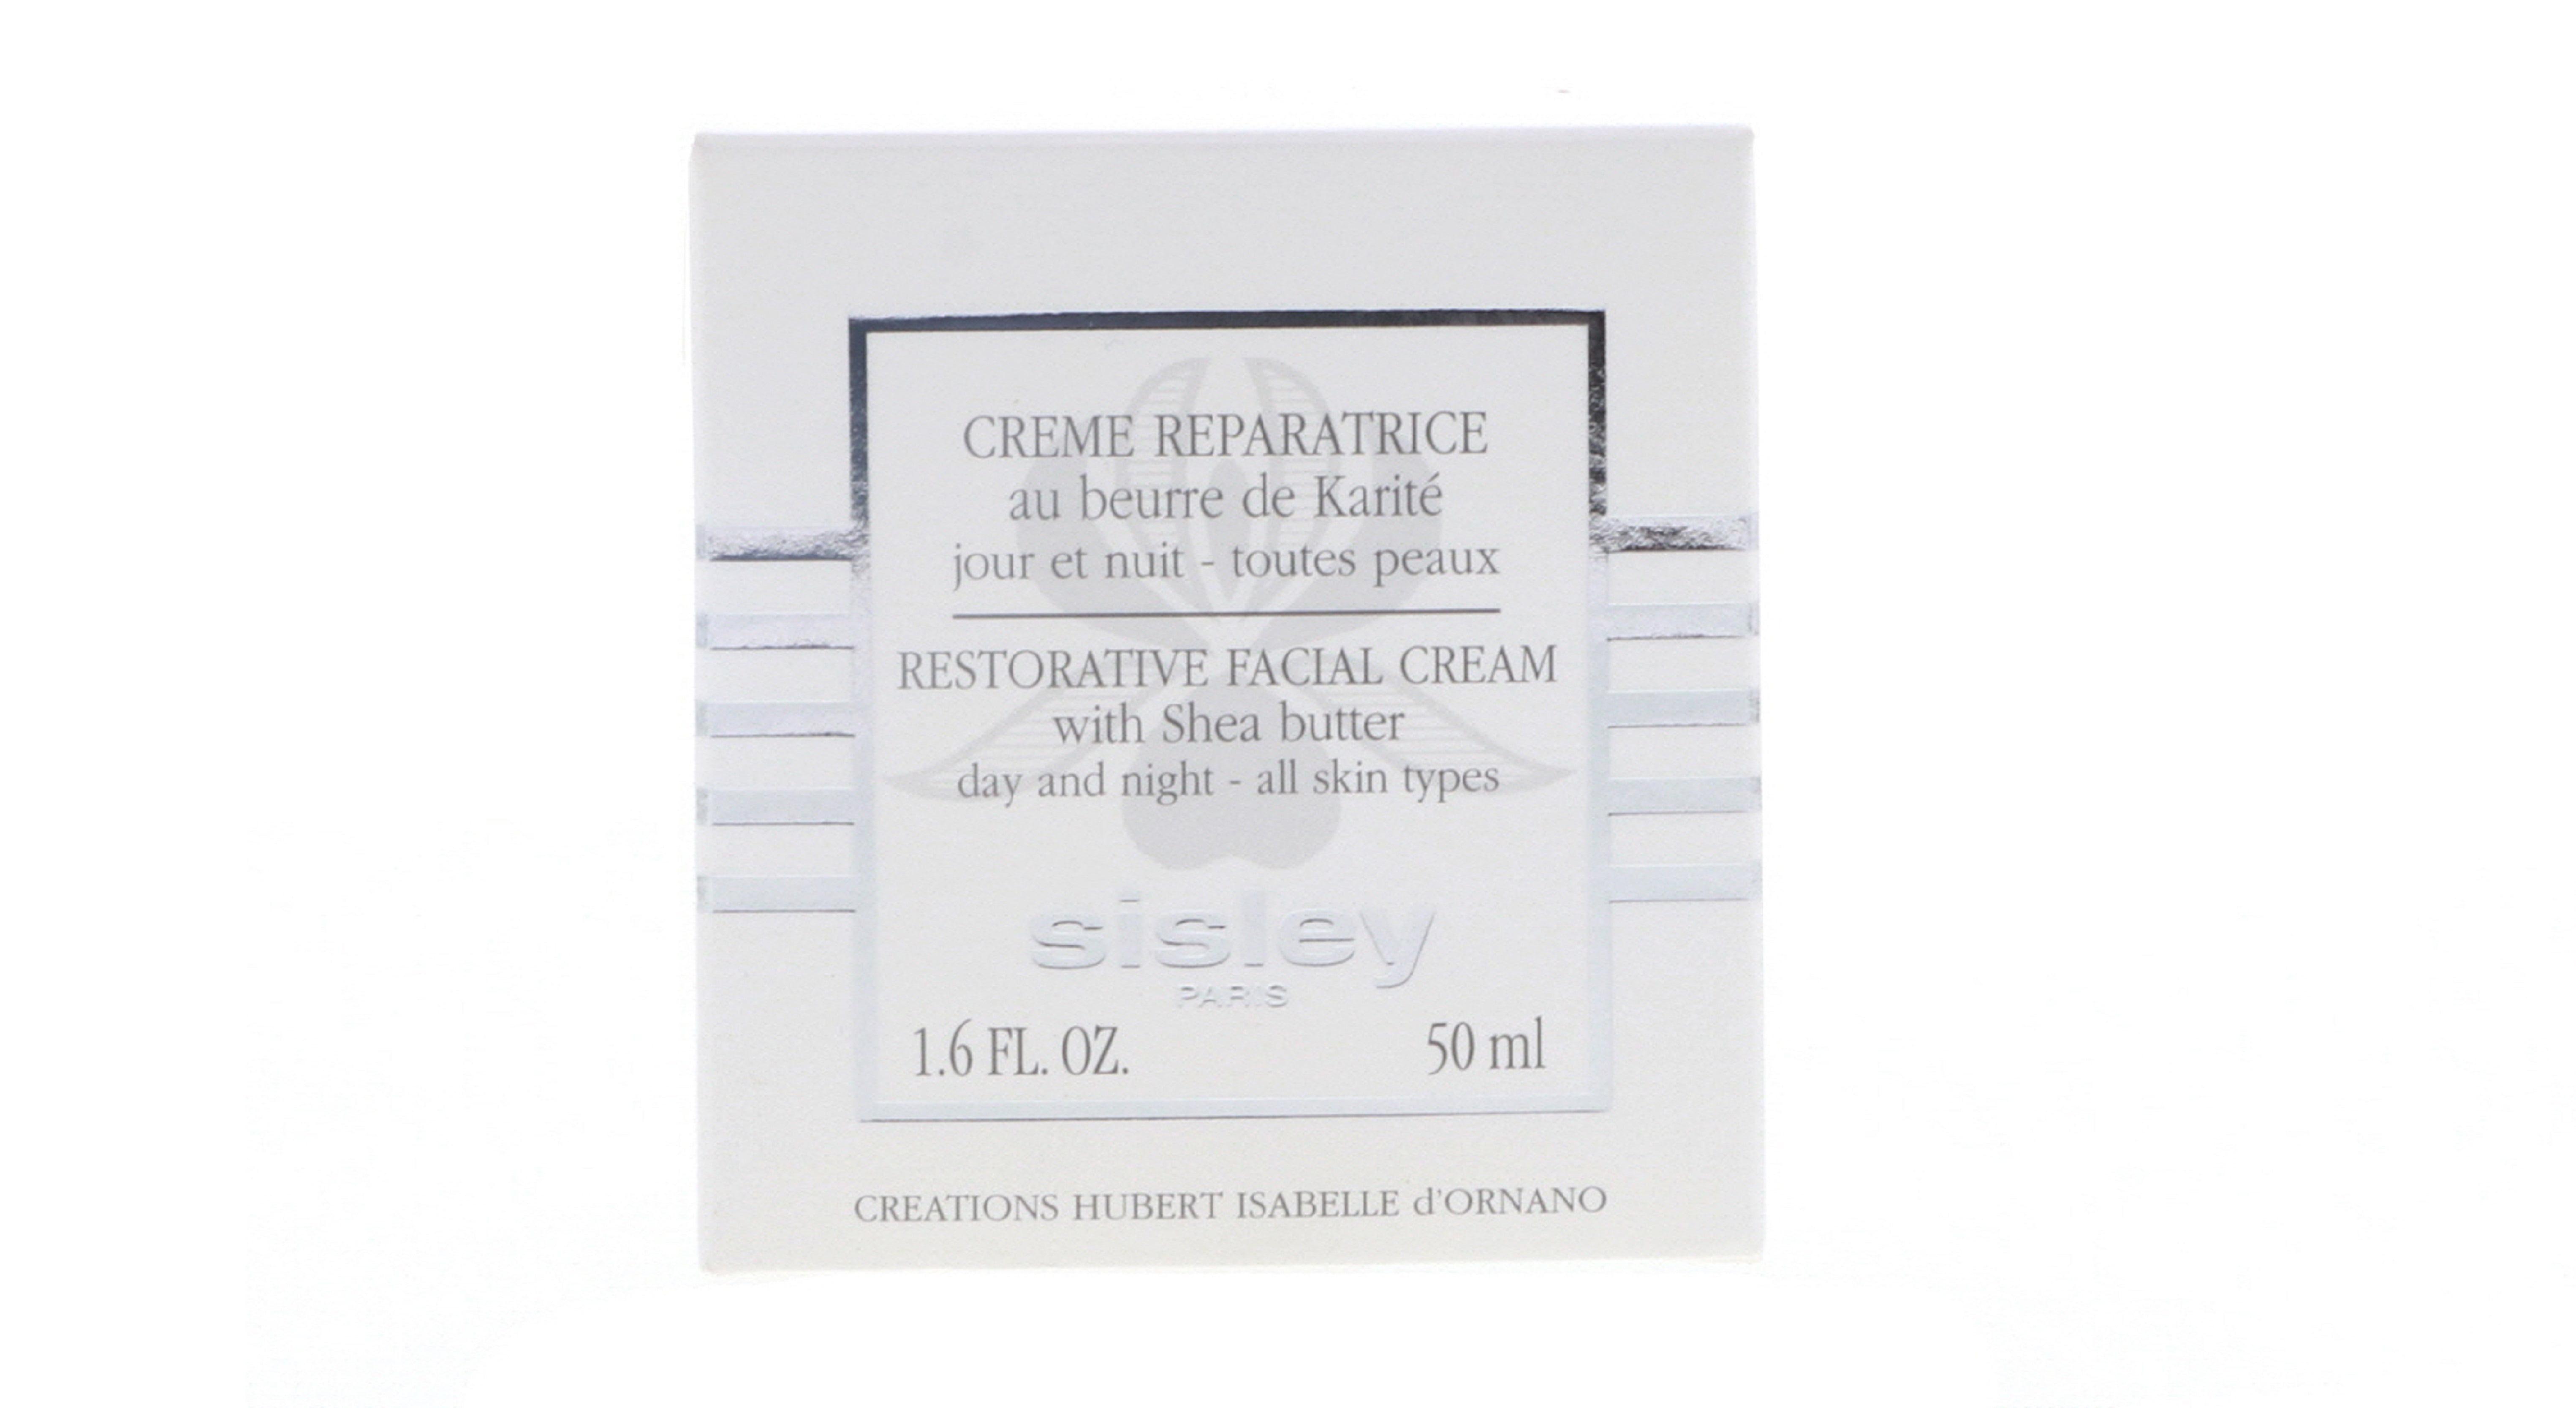 Sisley Restorative Facial Cream oz 1.6 with Shea Butter